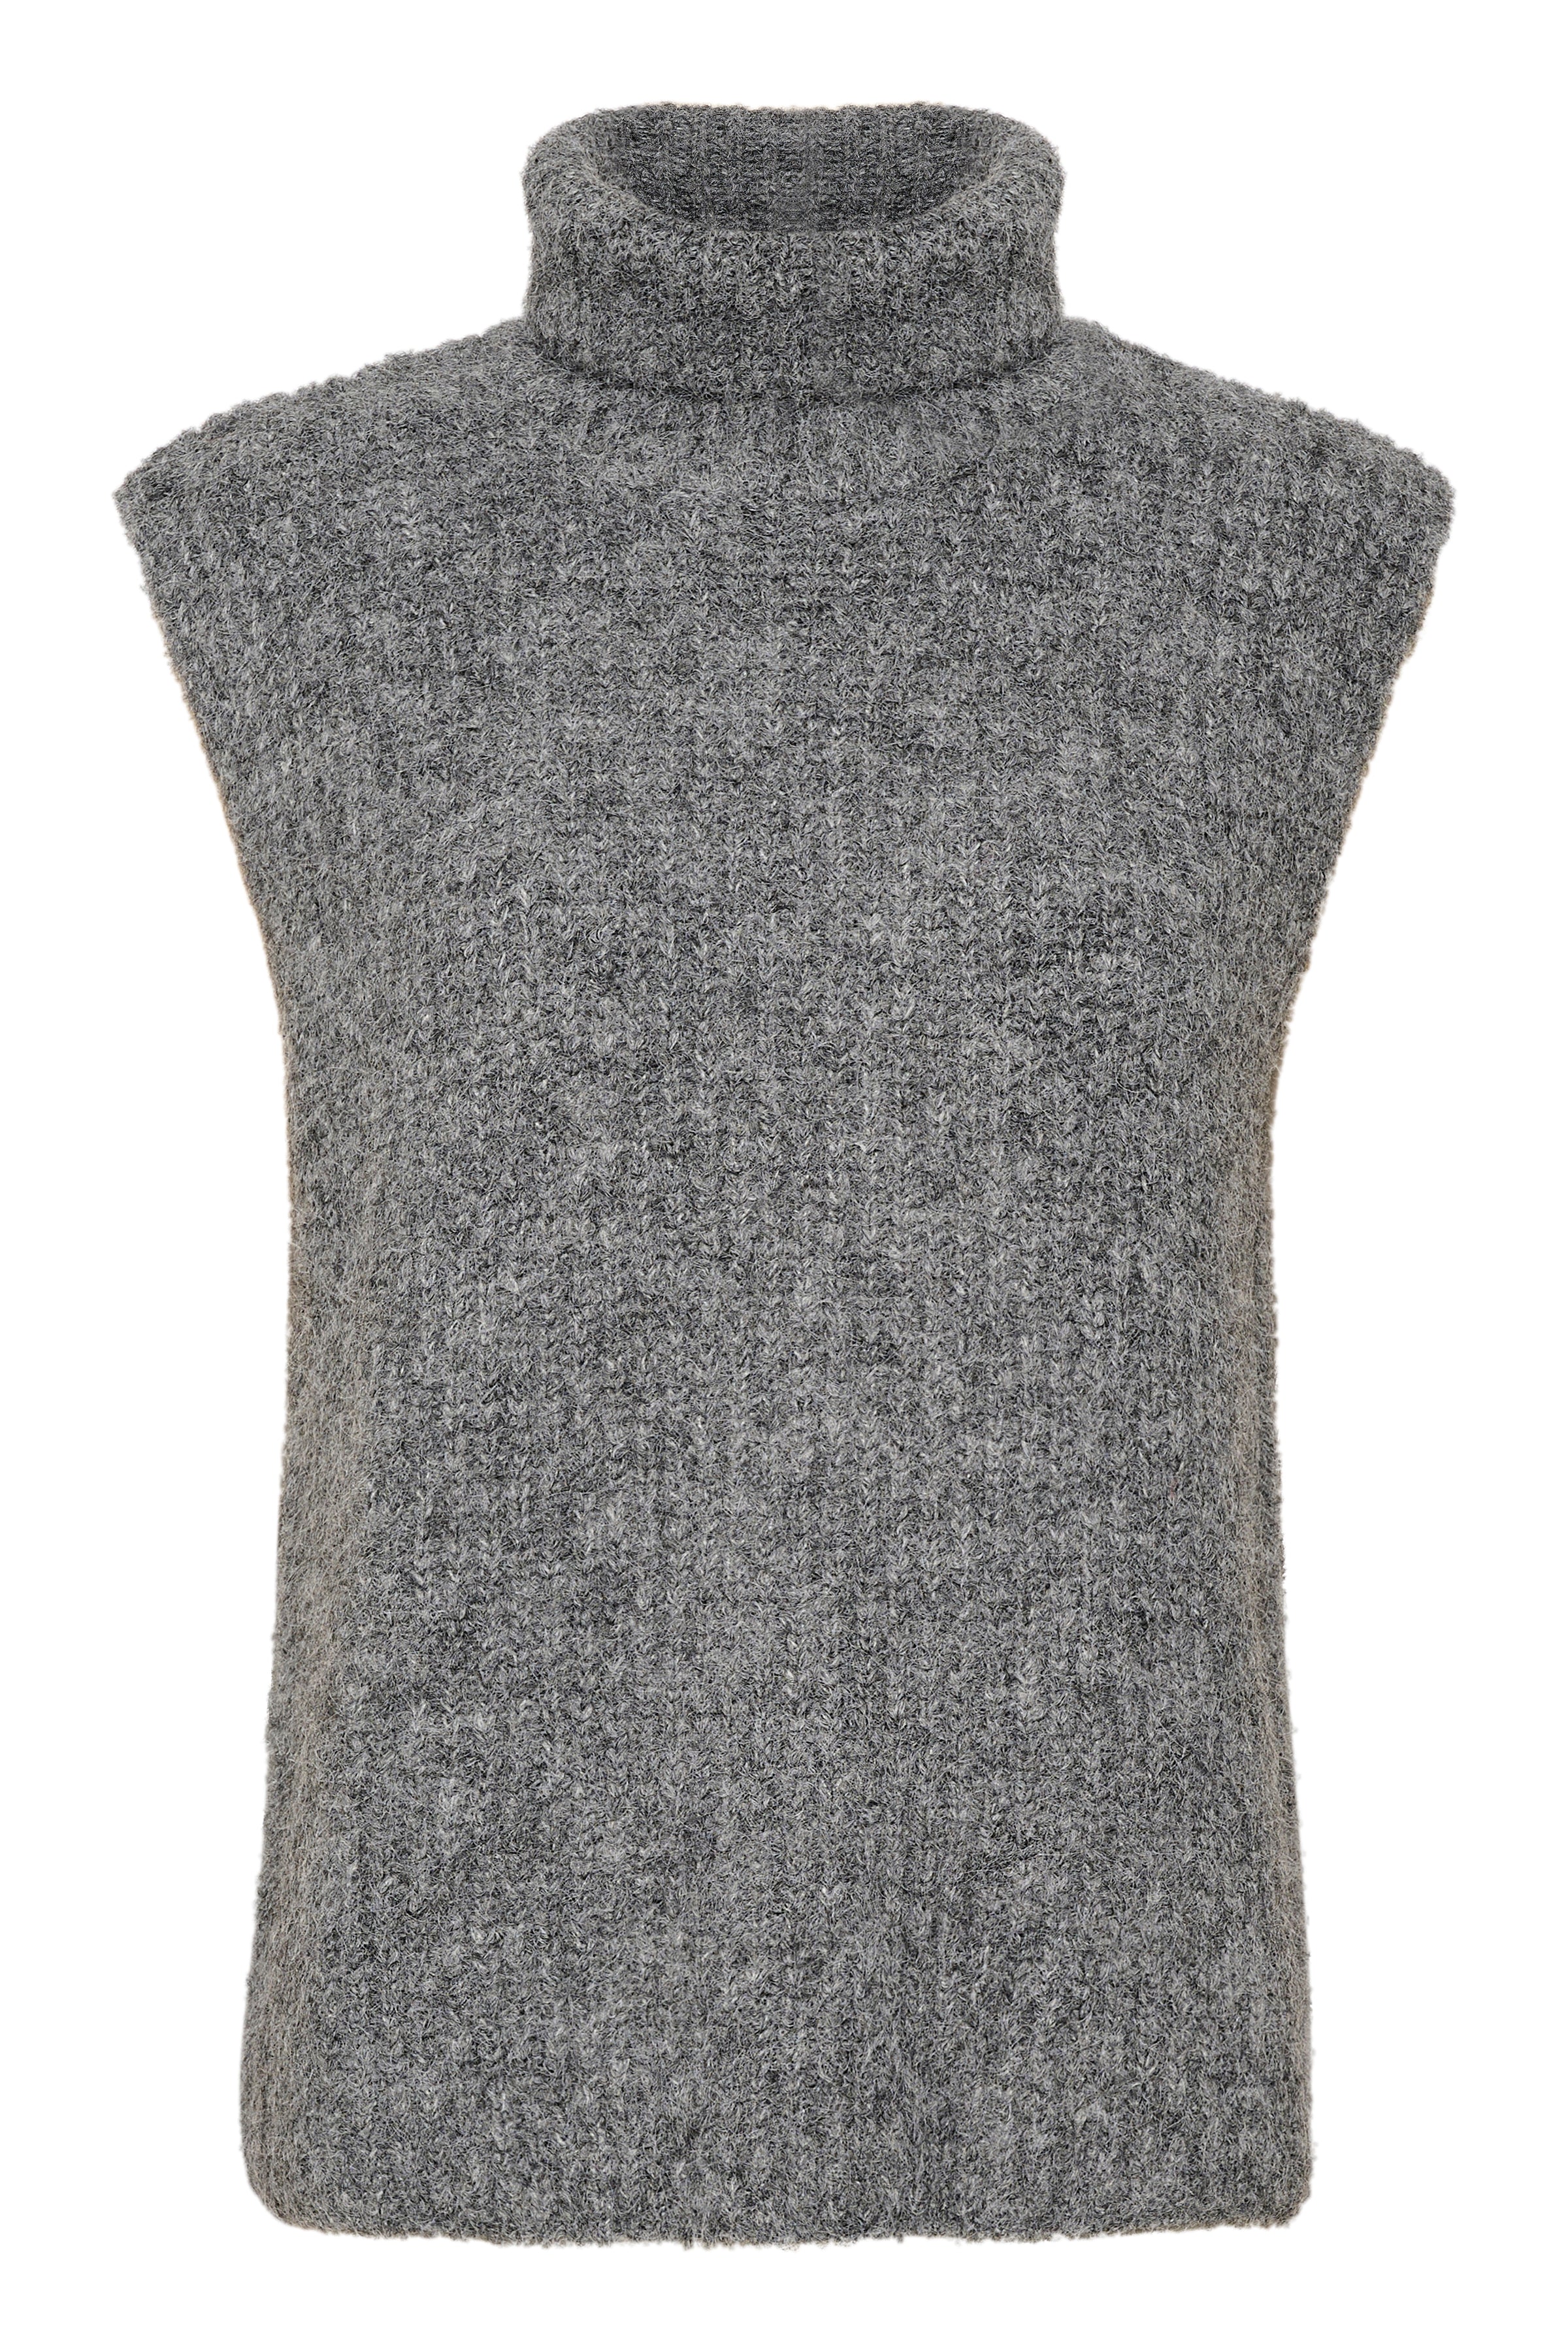 My Essential Wardrobe MeenaMW Knit Vest, Iron Grey